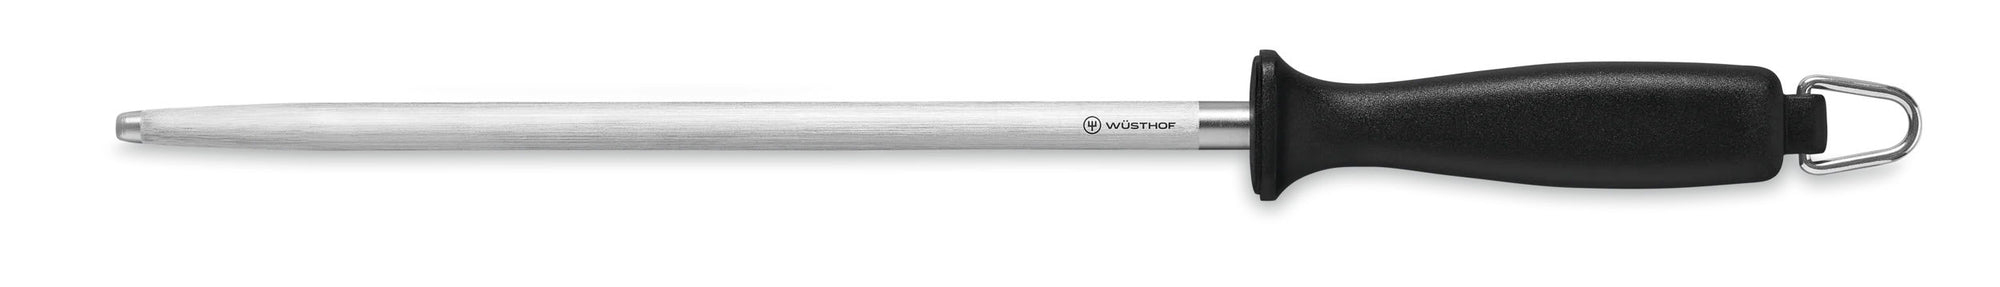 Wusthof Sharpening Steel, 26 cm (10-inch) - 4473-26